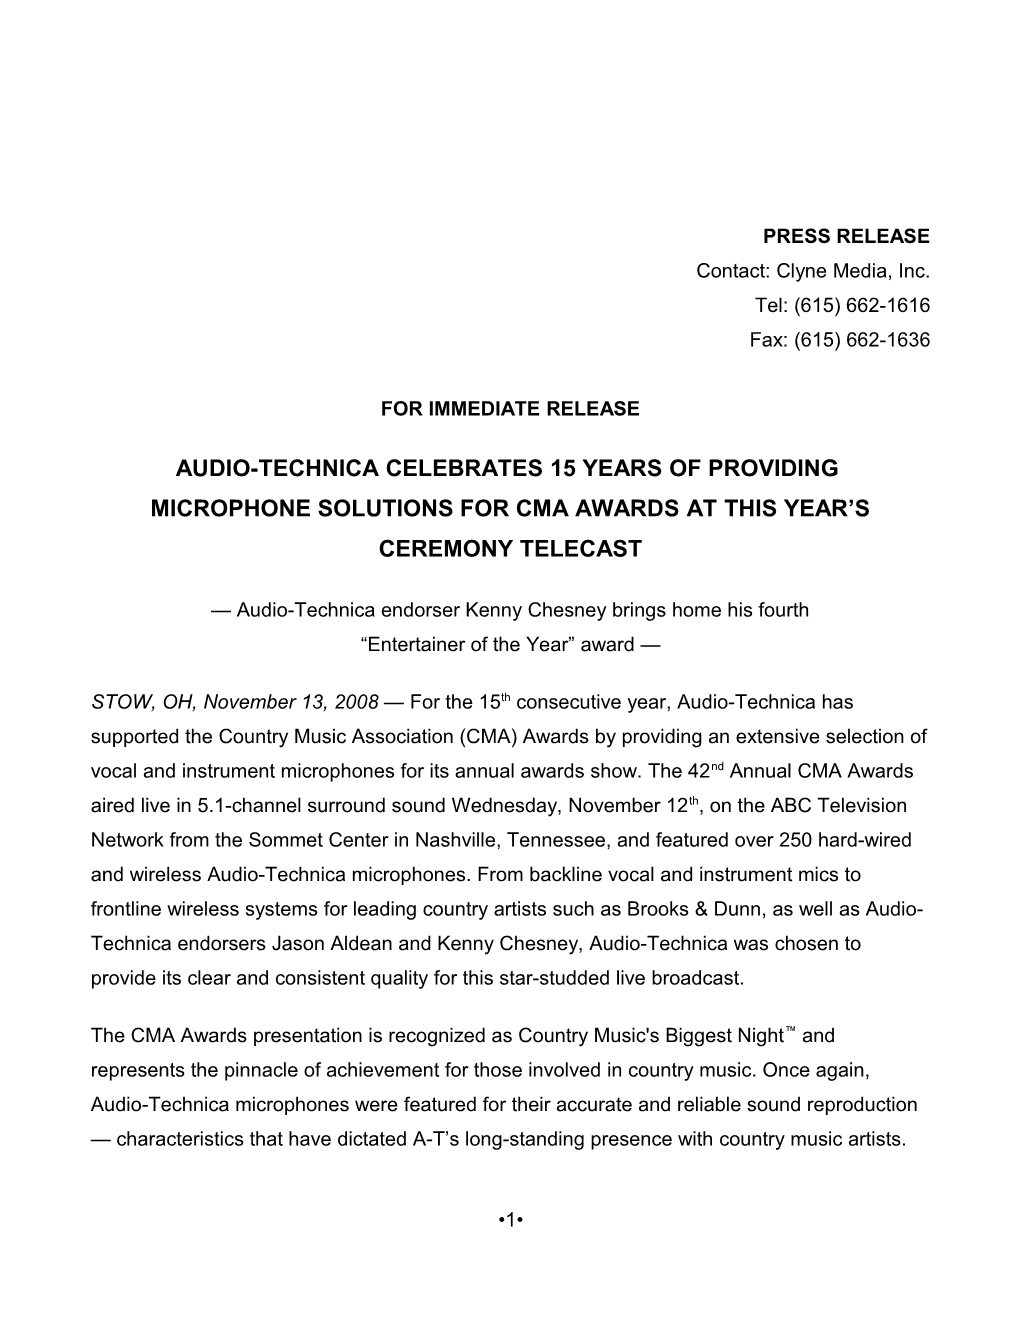 Audio-Technica Celebrates 15 Years of Providing